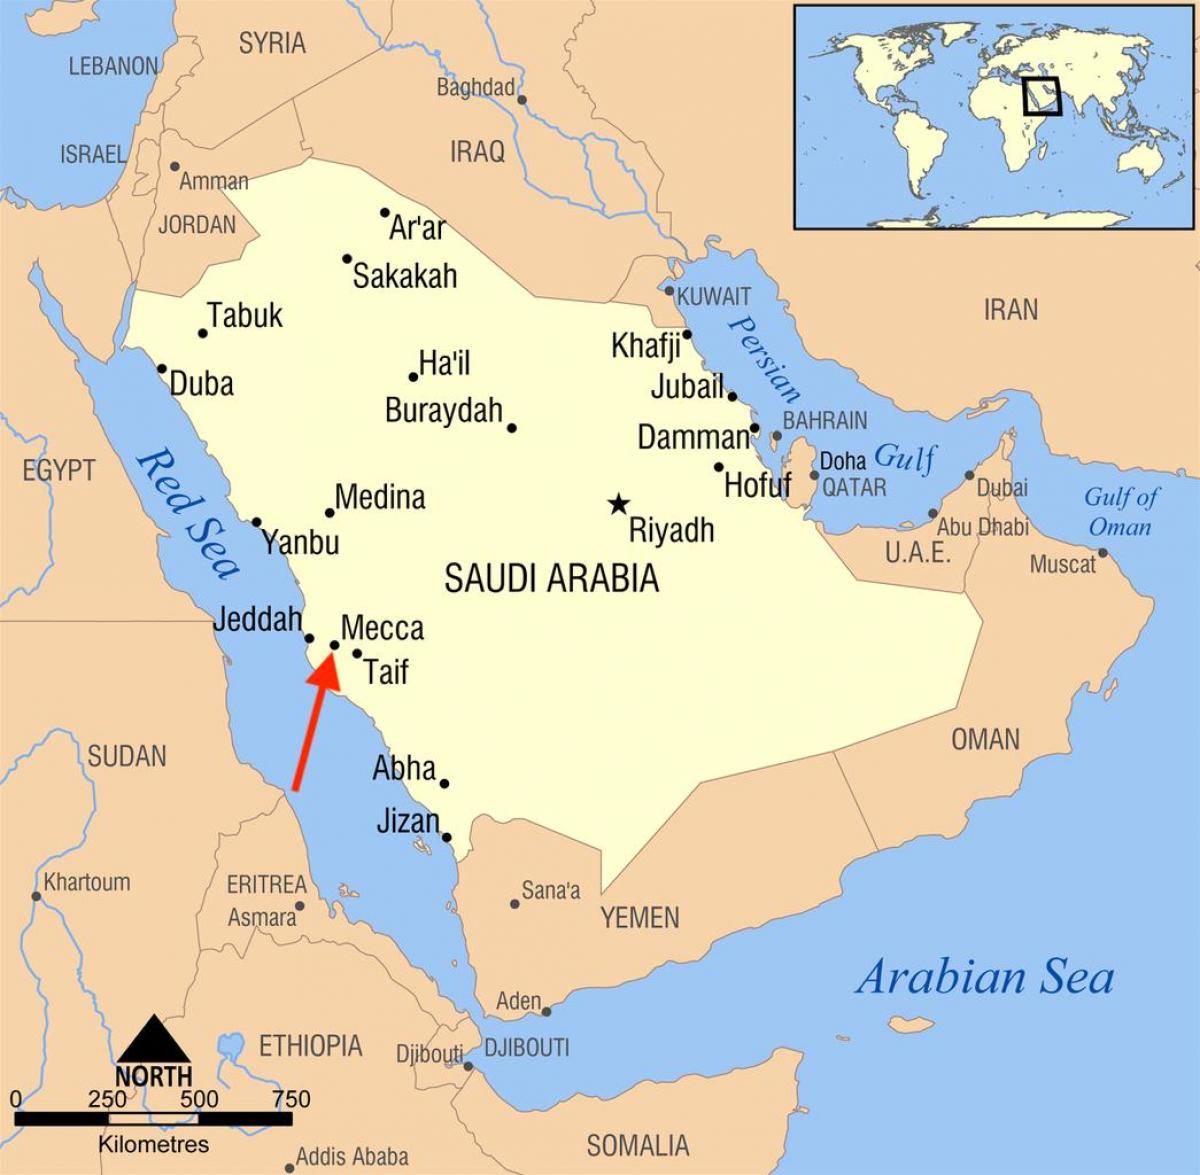 Mecca (Makkah) on Saudi Arabia map